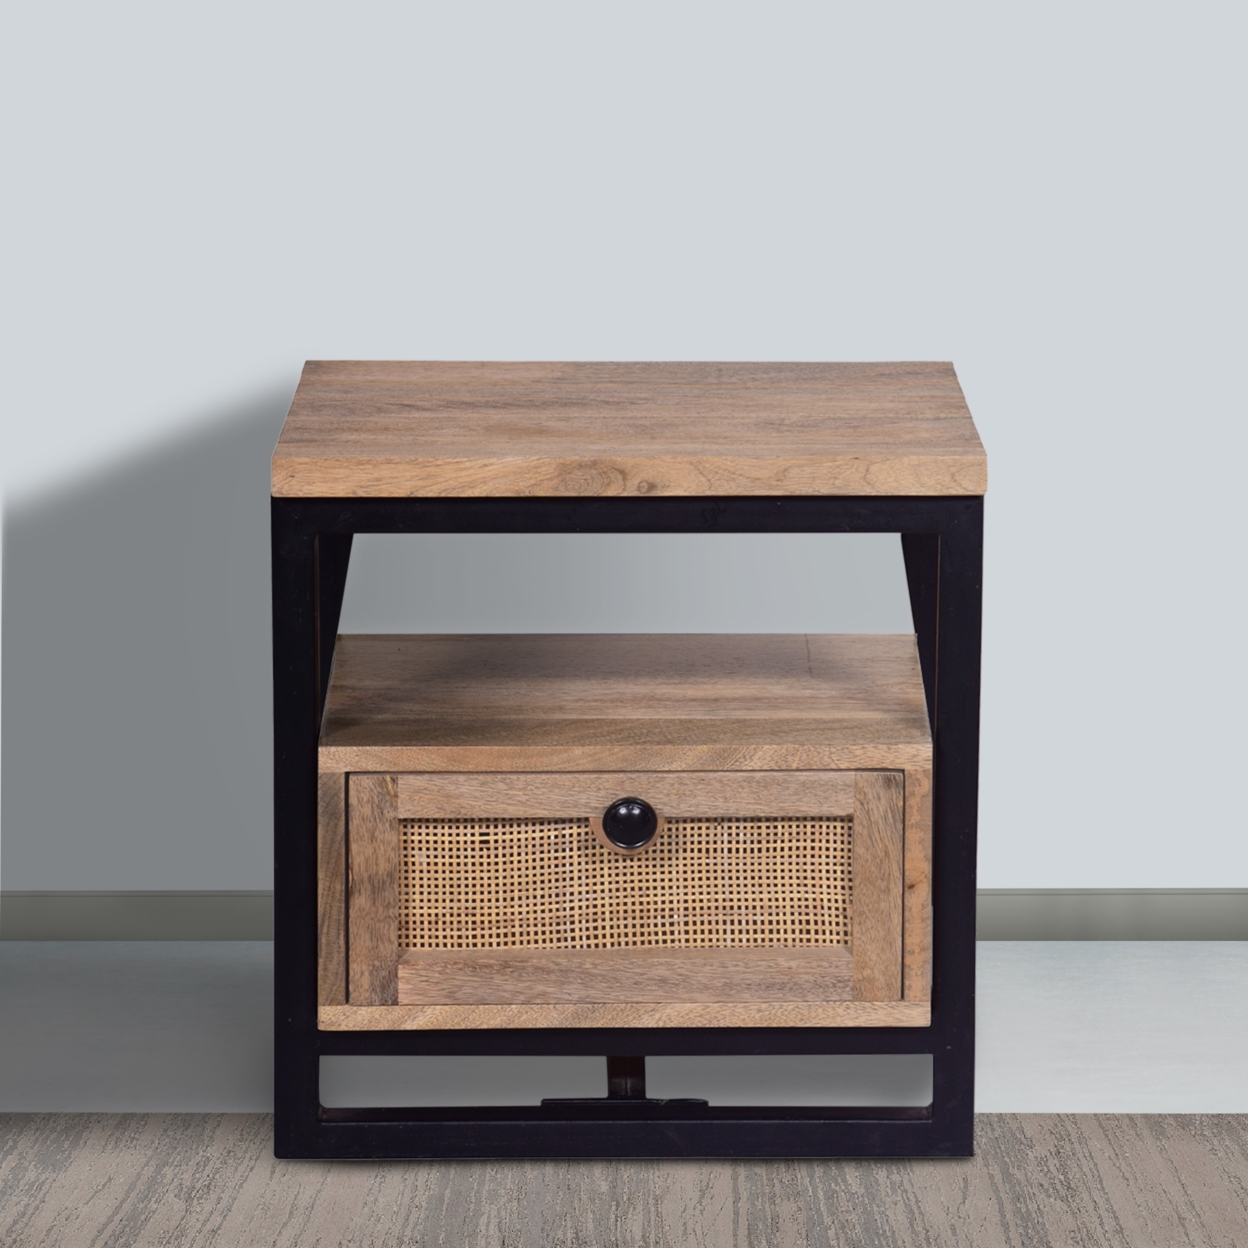 18 Inch Nightstand End Table, 1 Drawer, Open Storage, Natural Brown Mango Wood With A Rectangular Black Iron Frame- Saltoro Sherpi